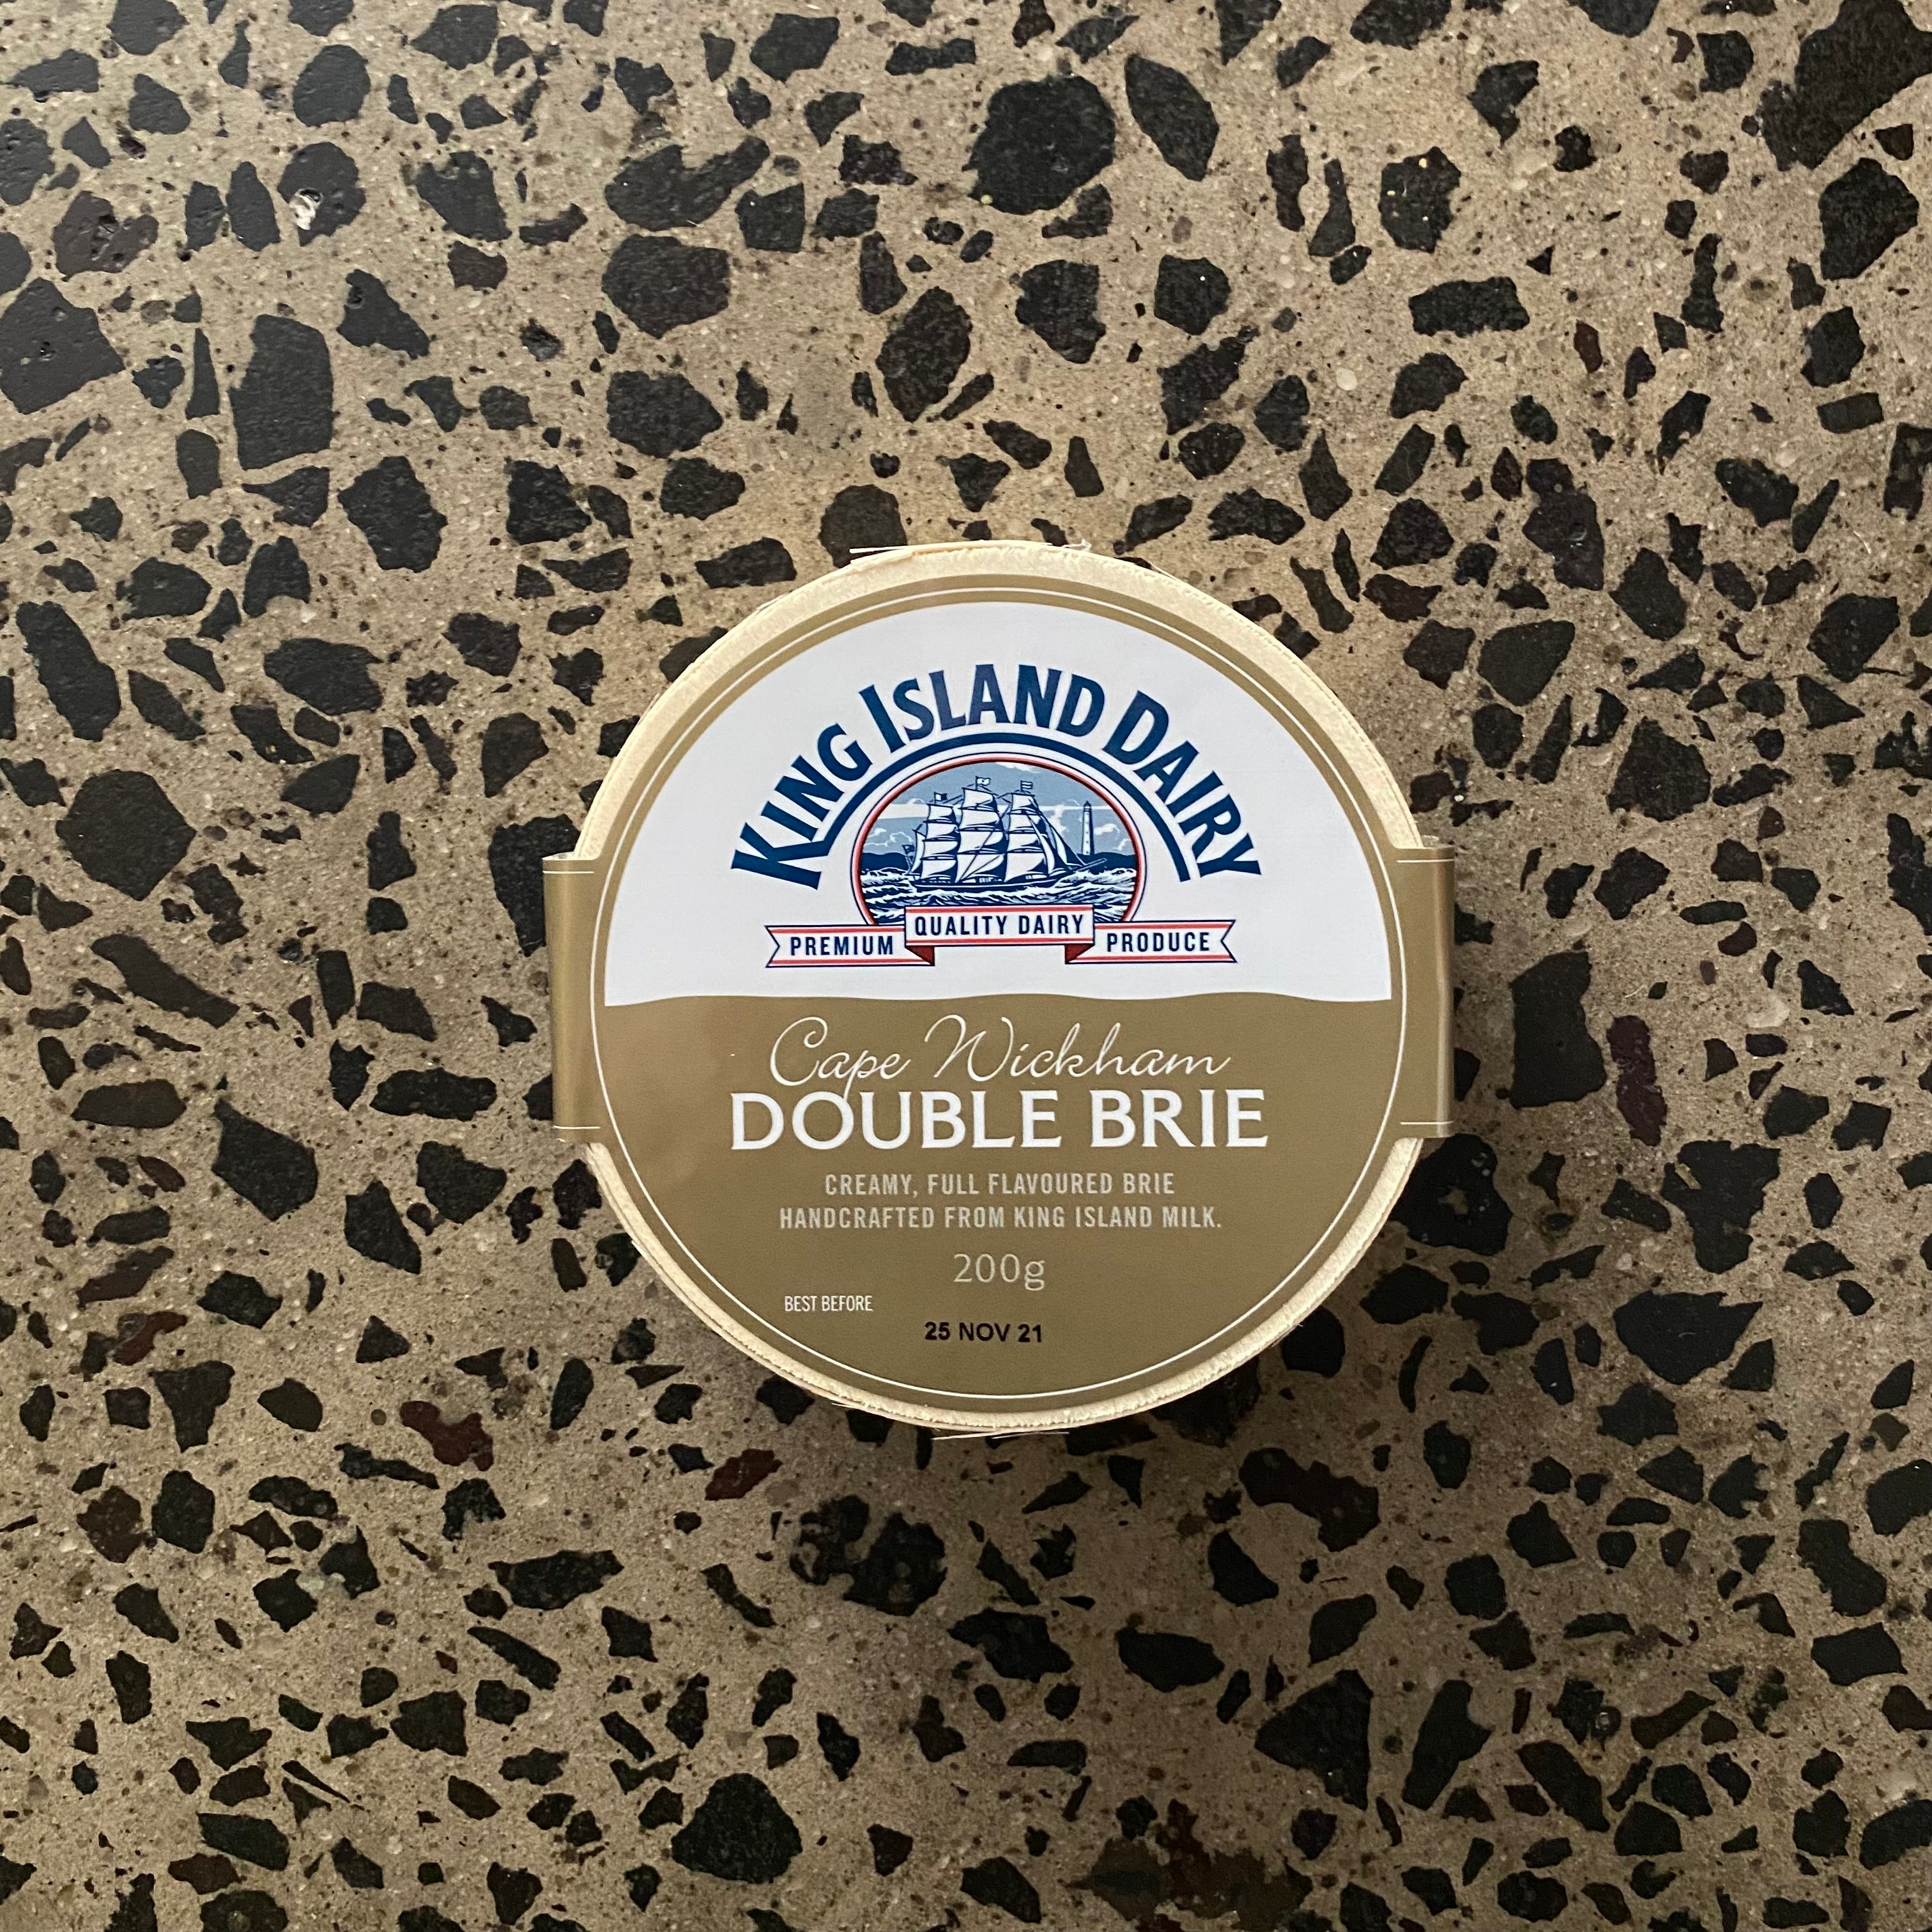 King Island Dairy ‘Cape Wickham’ Double Brie